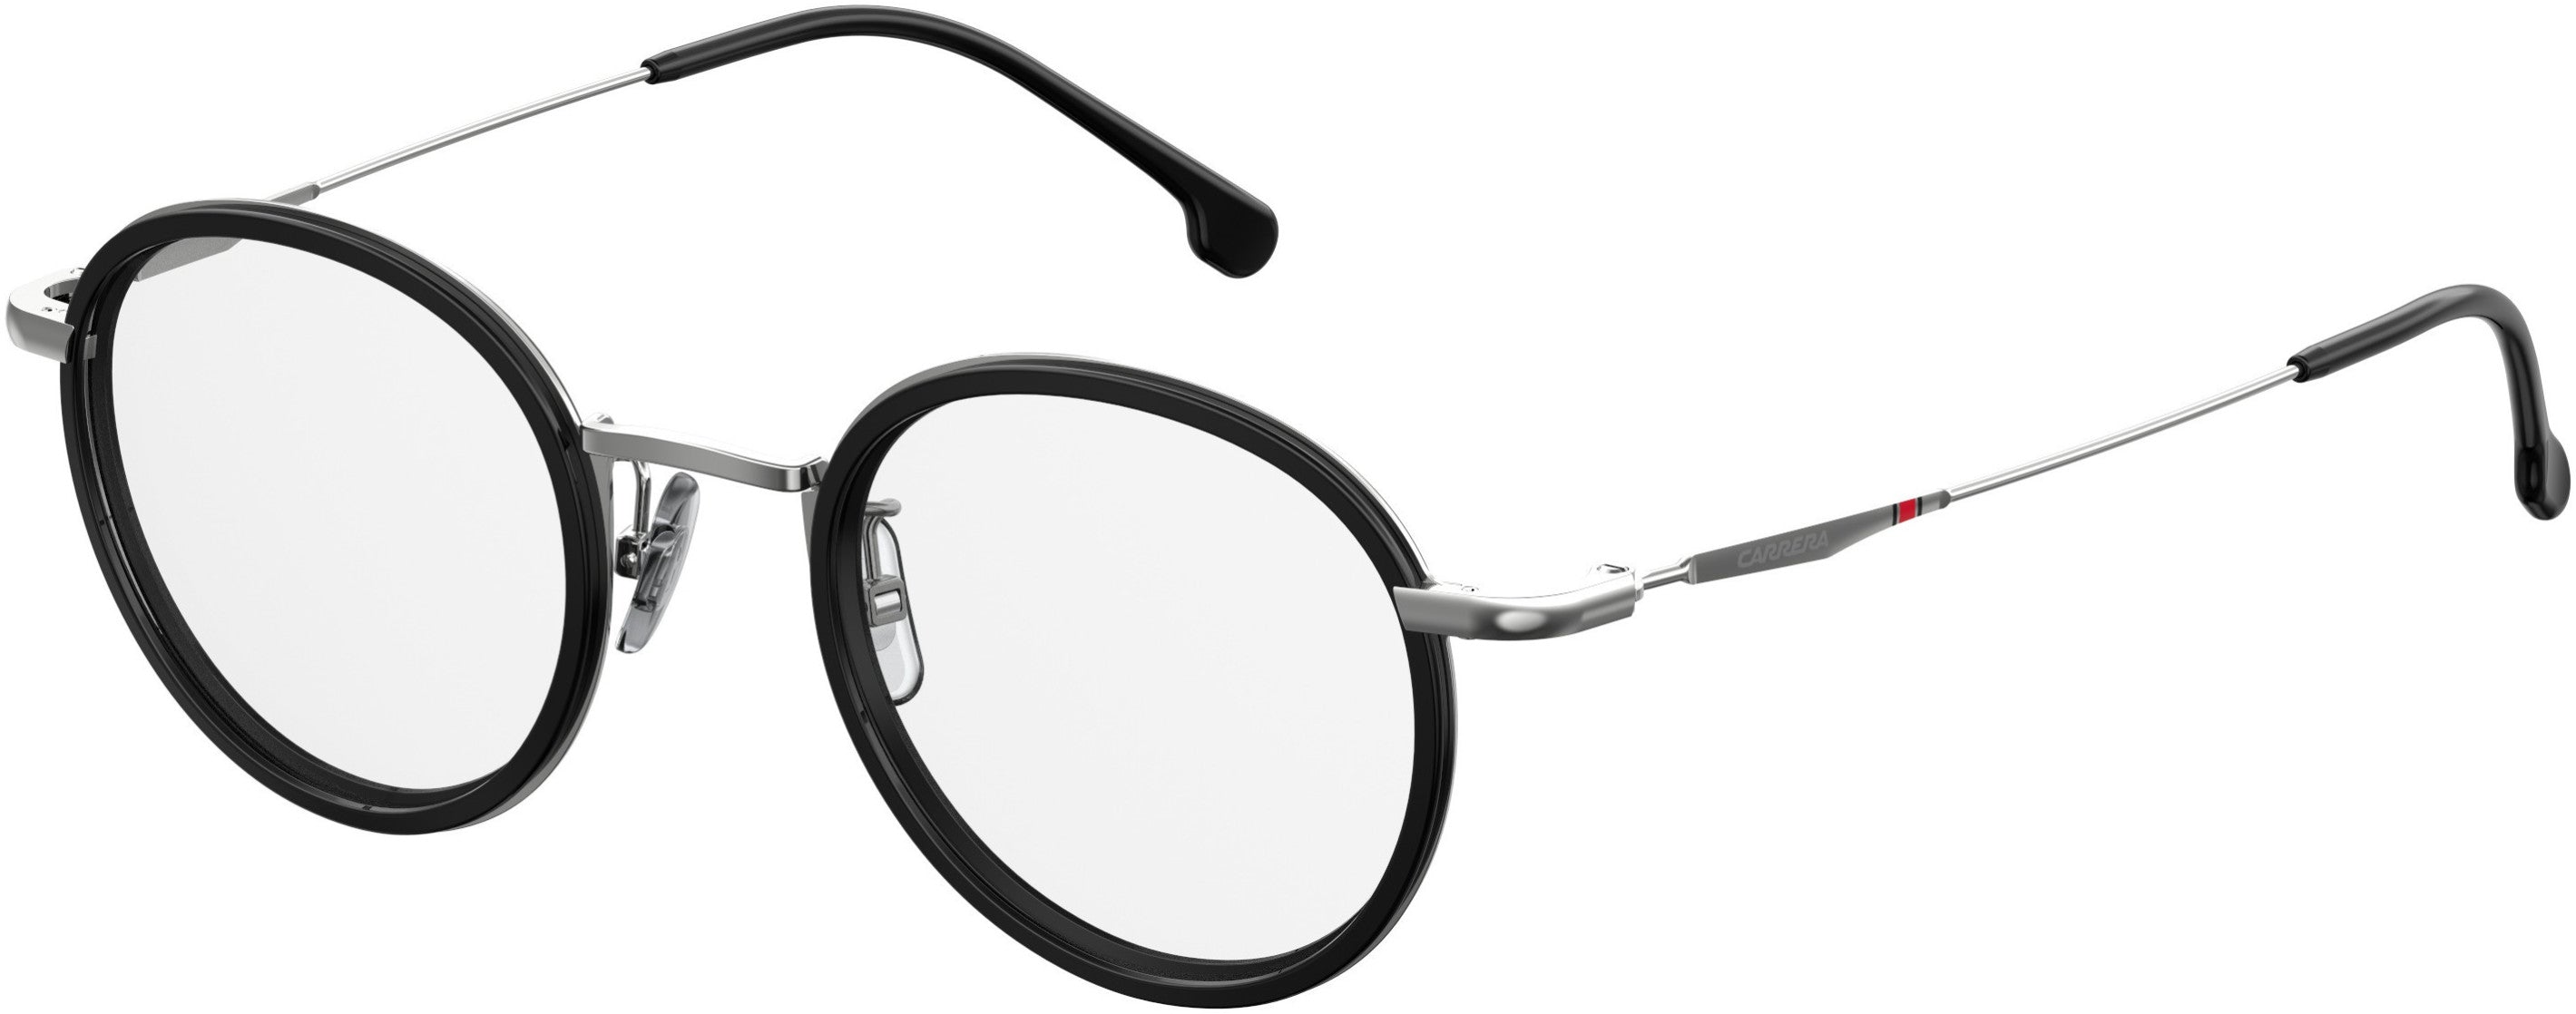  Carrera 163/V/f Oval Modified Eyeglasses 0807-0807  Black (00 Demo Lens)